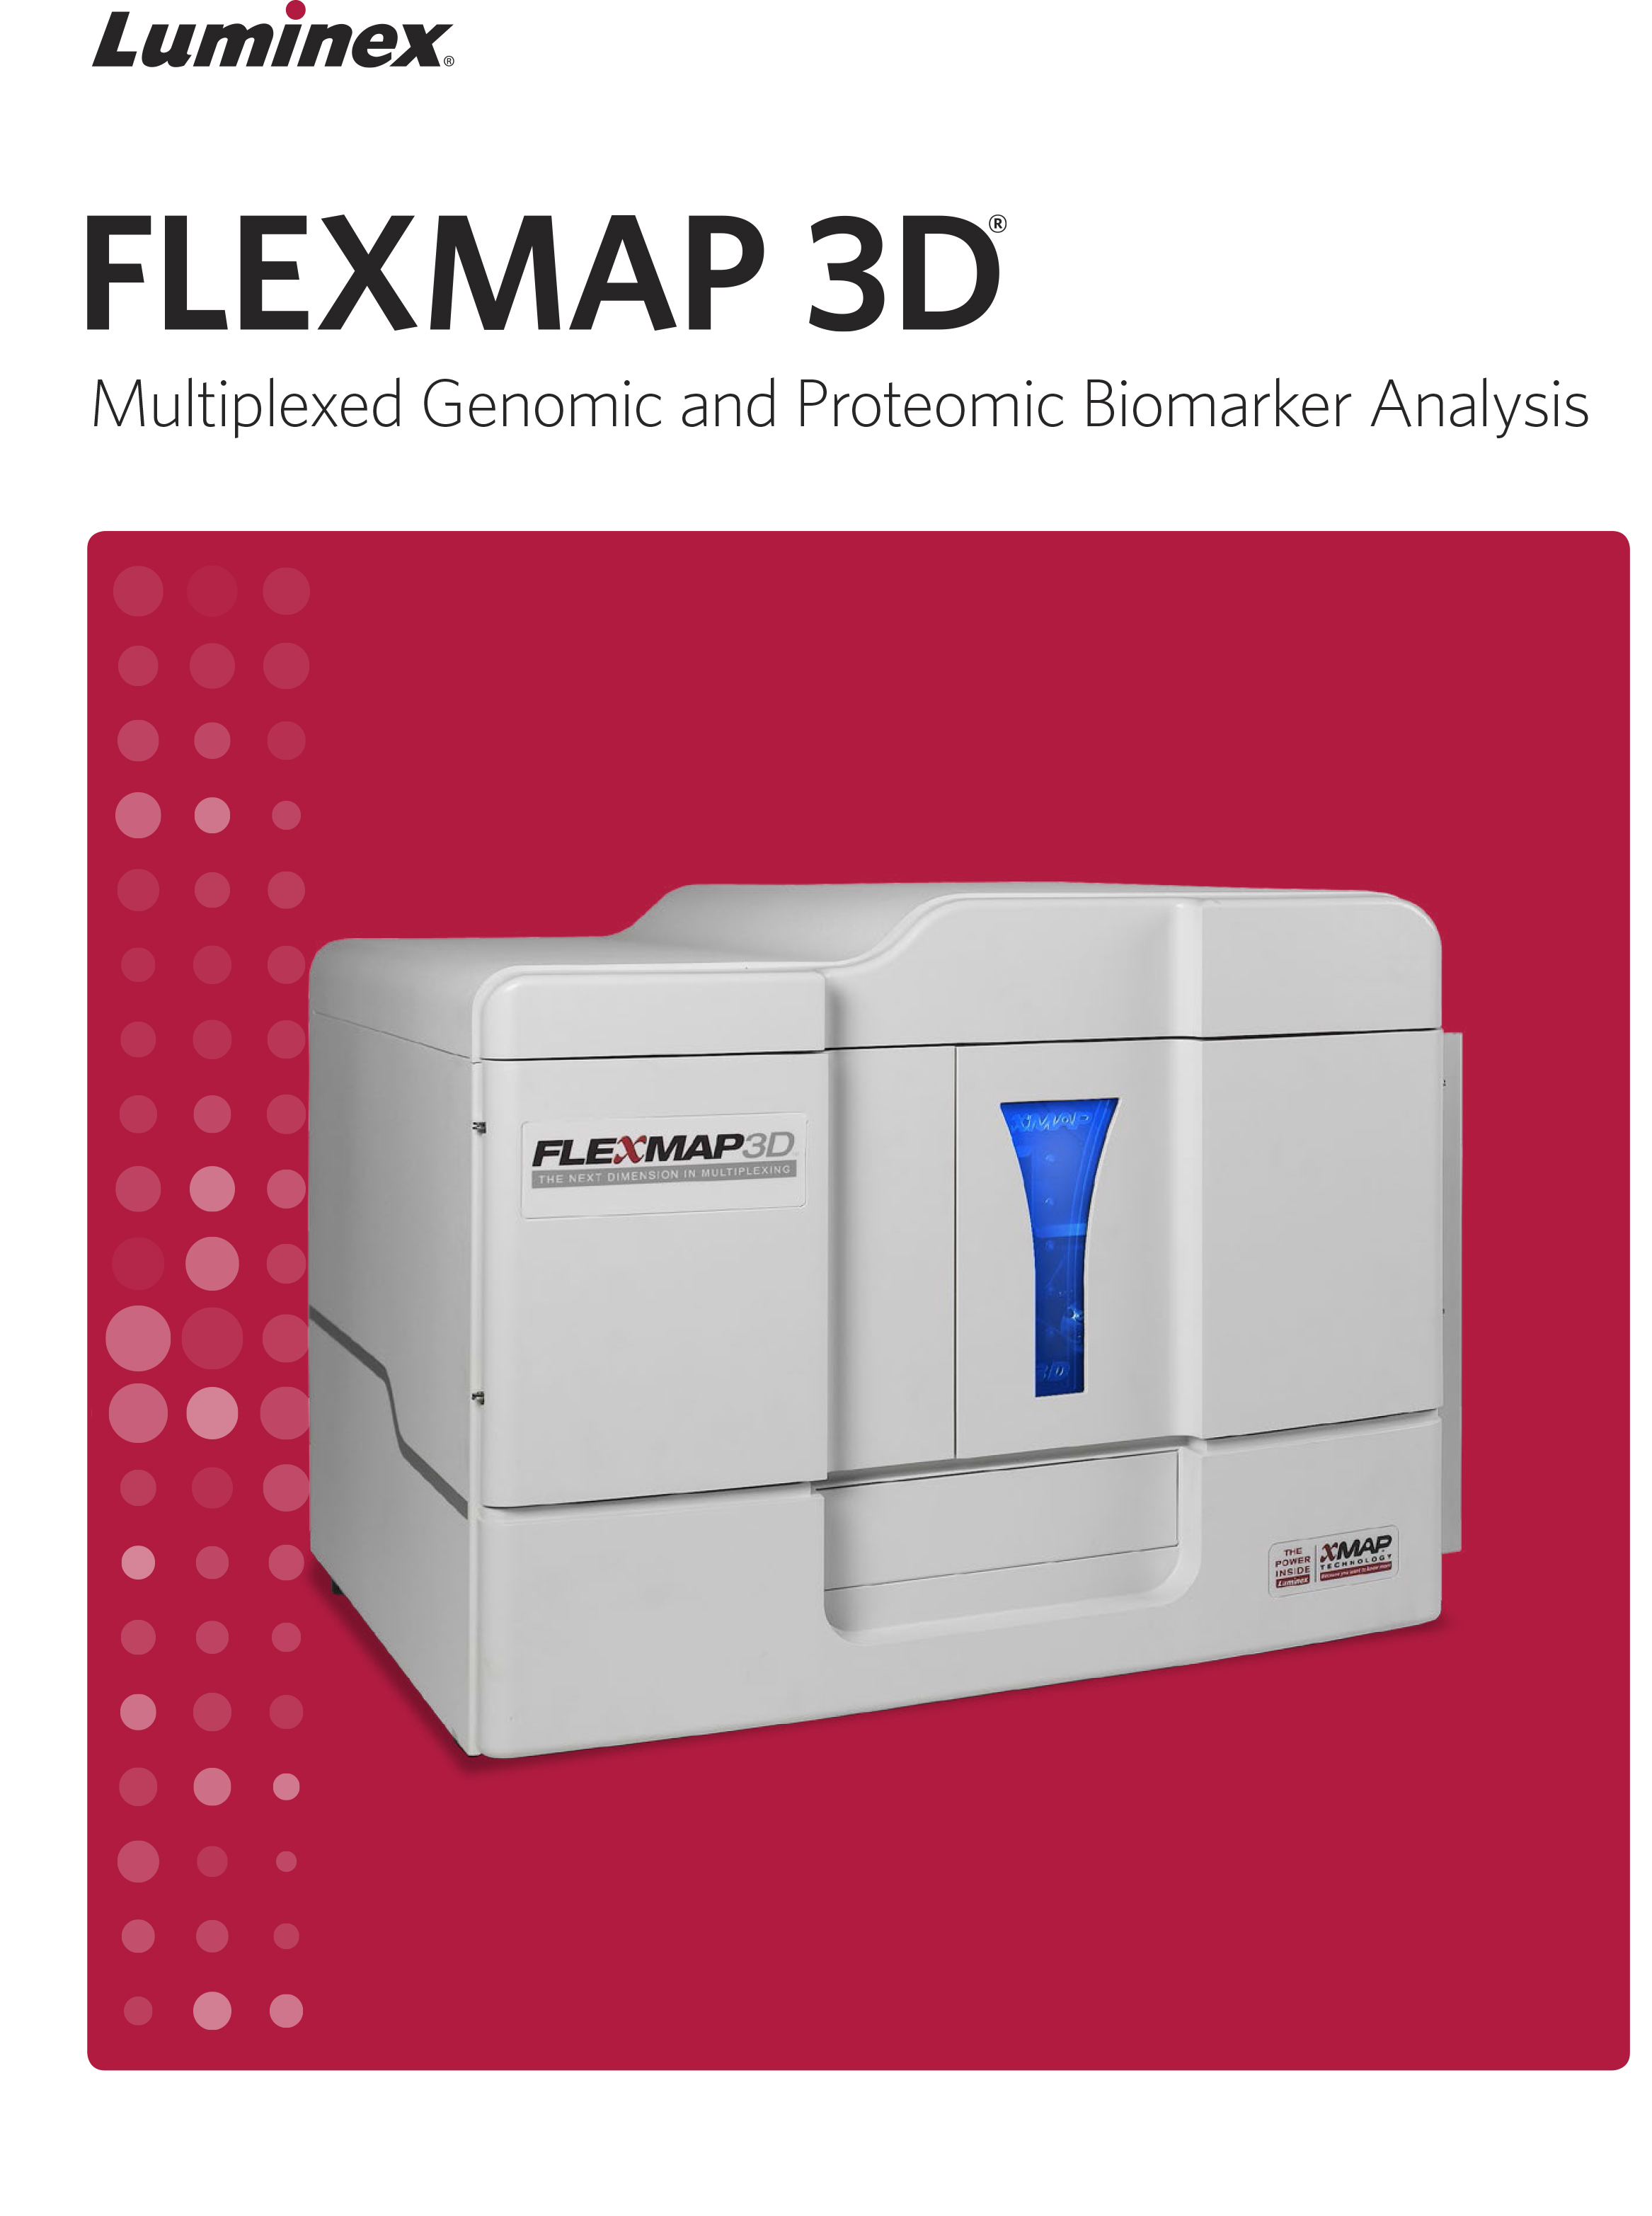 FLEXMAP 3D Product Sheet IVD